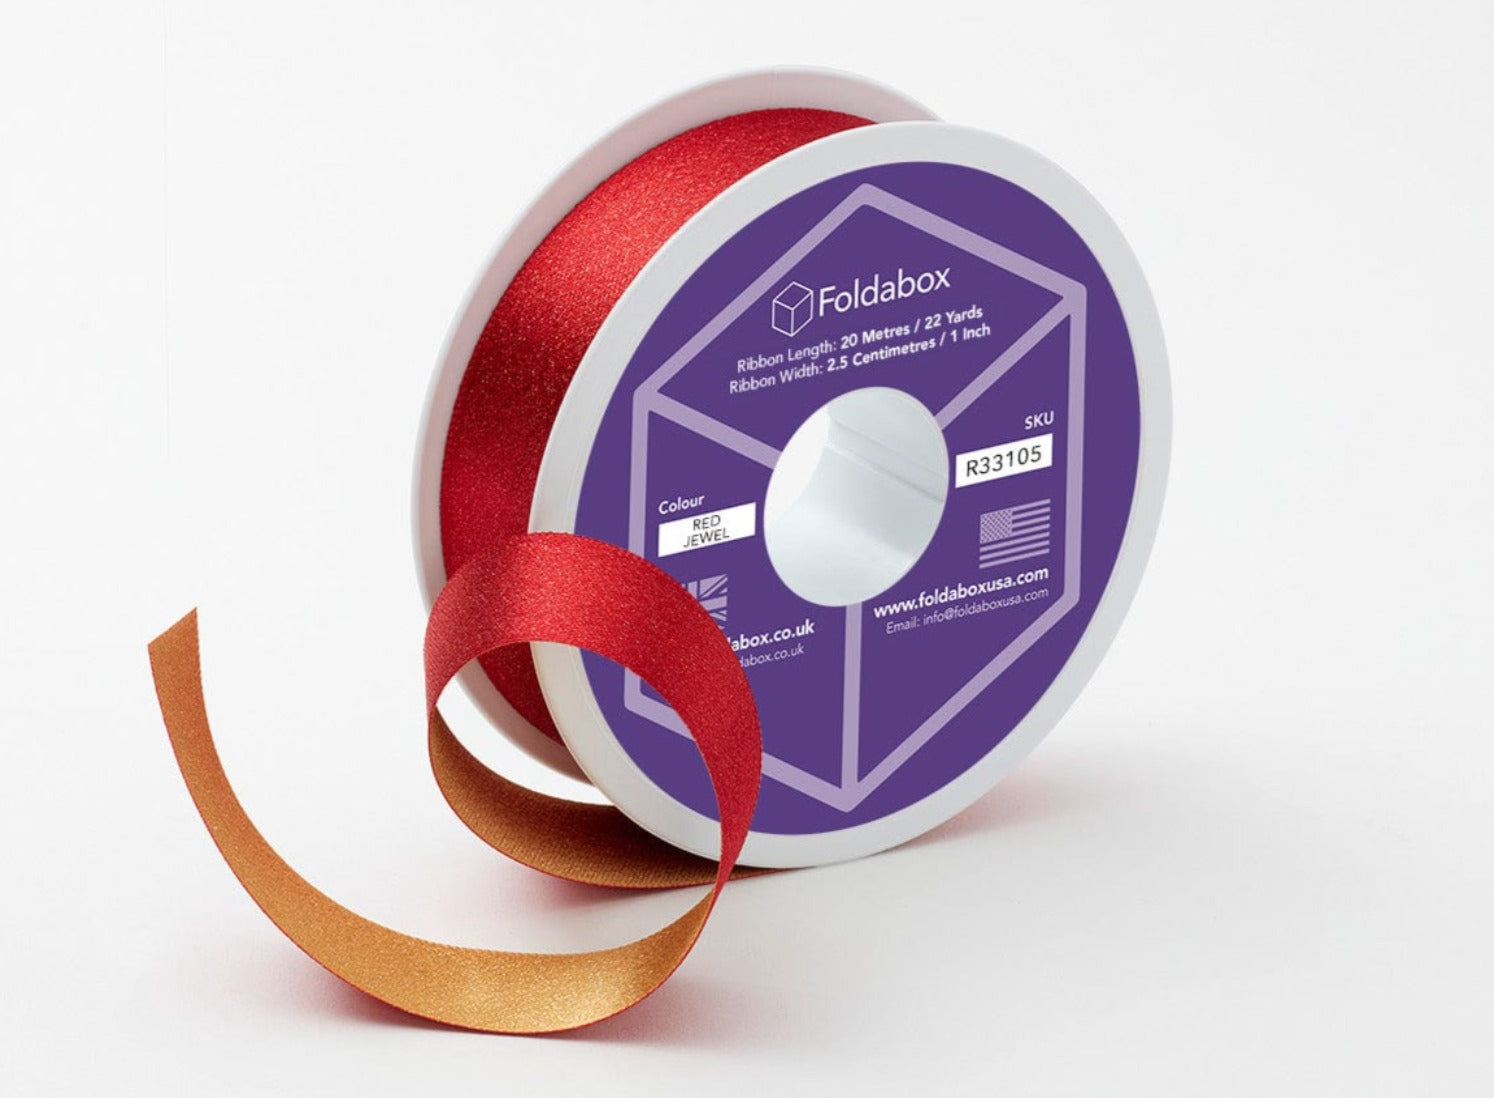 Red Jewel 20m Sparkle Satin Ribbon Roll from Foldabox